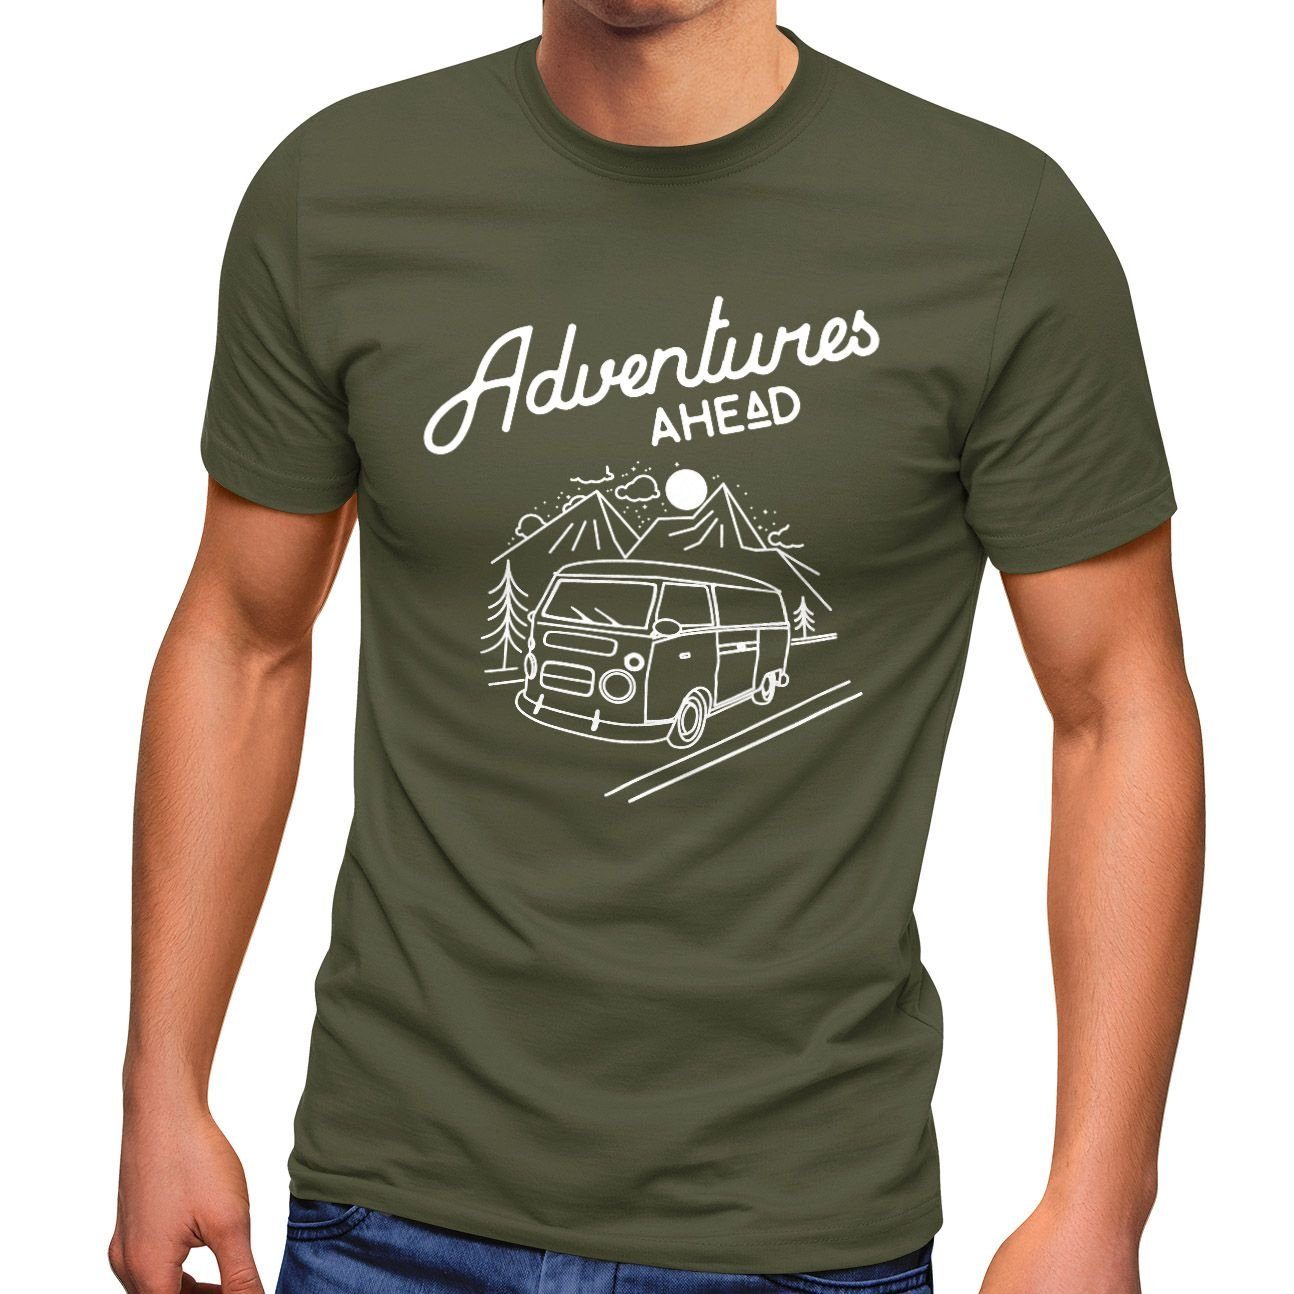 MoonWorks Print-Shirt Herren T-Shirt Bus Retro Abenteuer Adventures Ahead Moonworks® mit Print grün